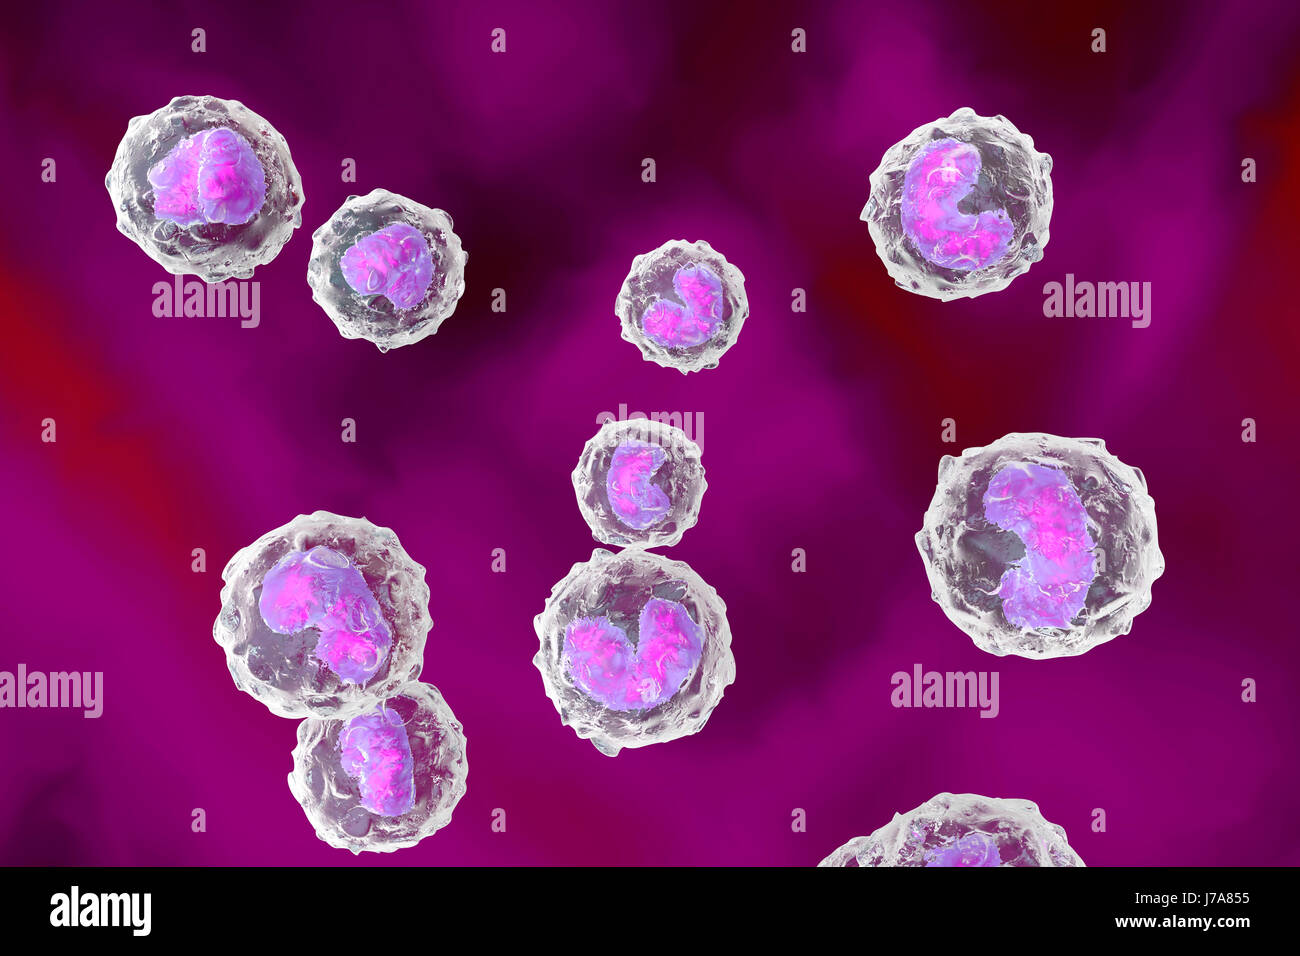 Monocyte immune system defense cells, 3D Rendering Stock Photo